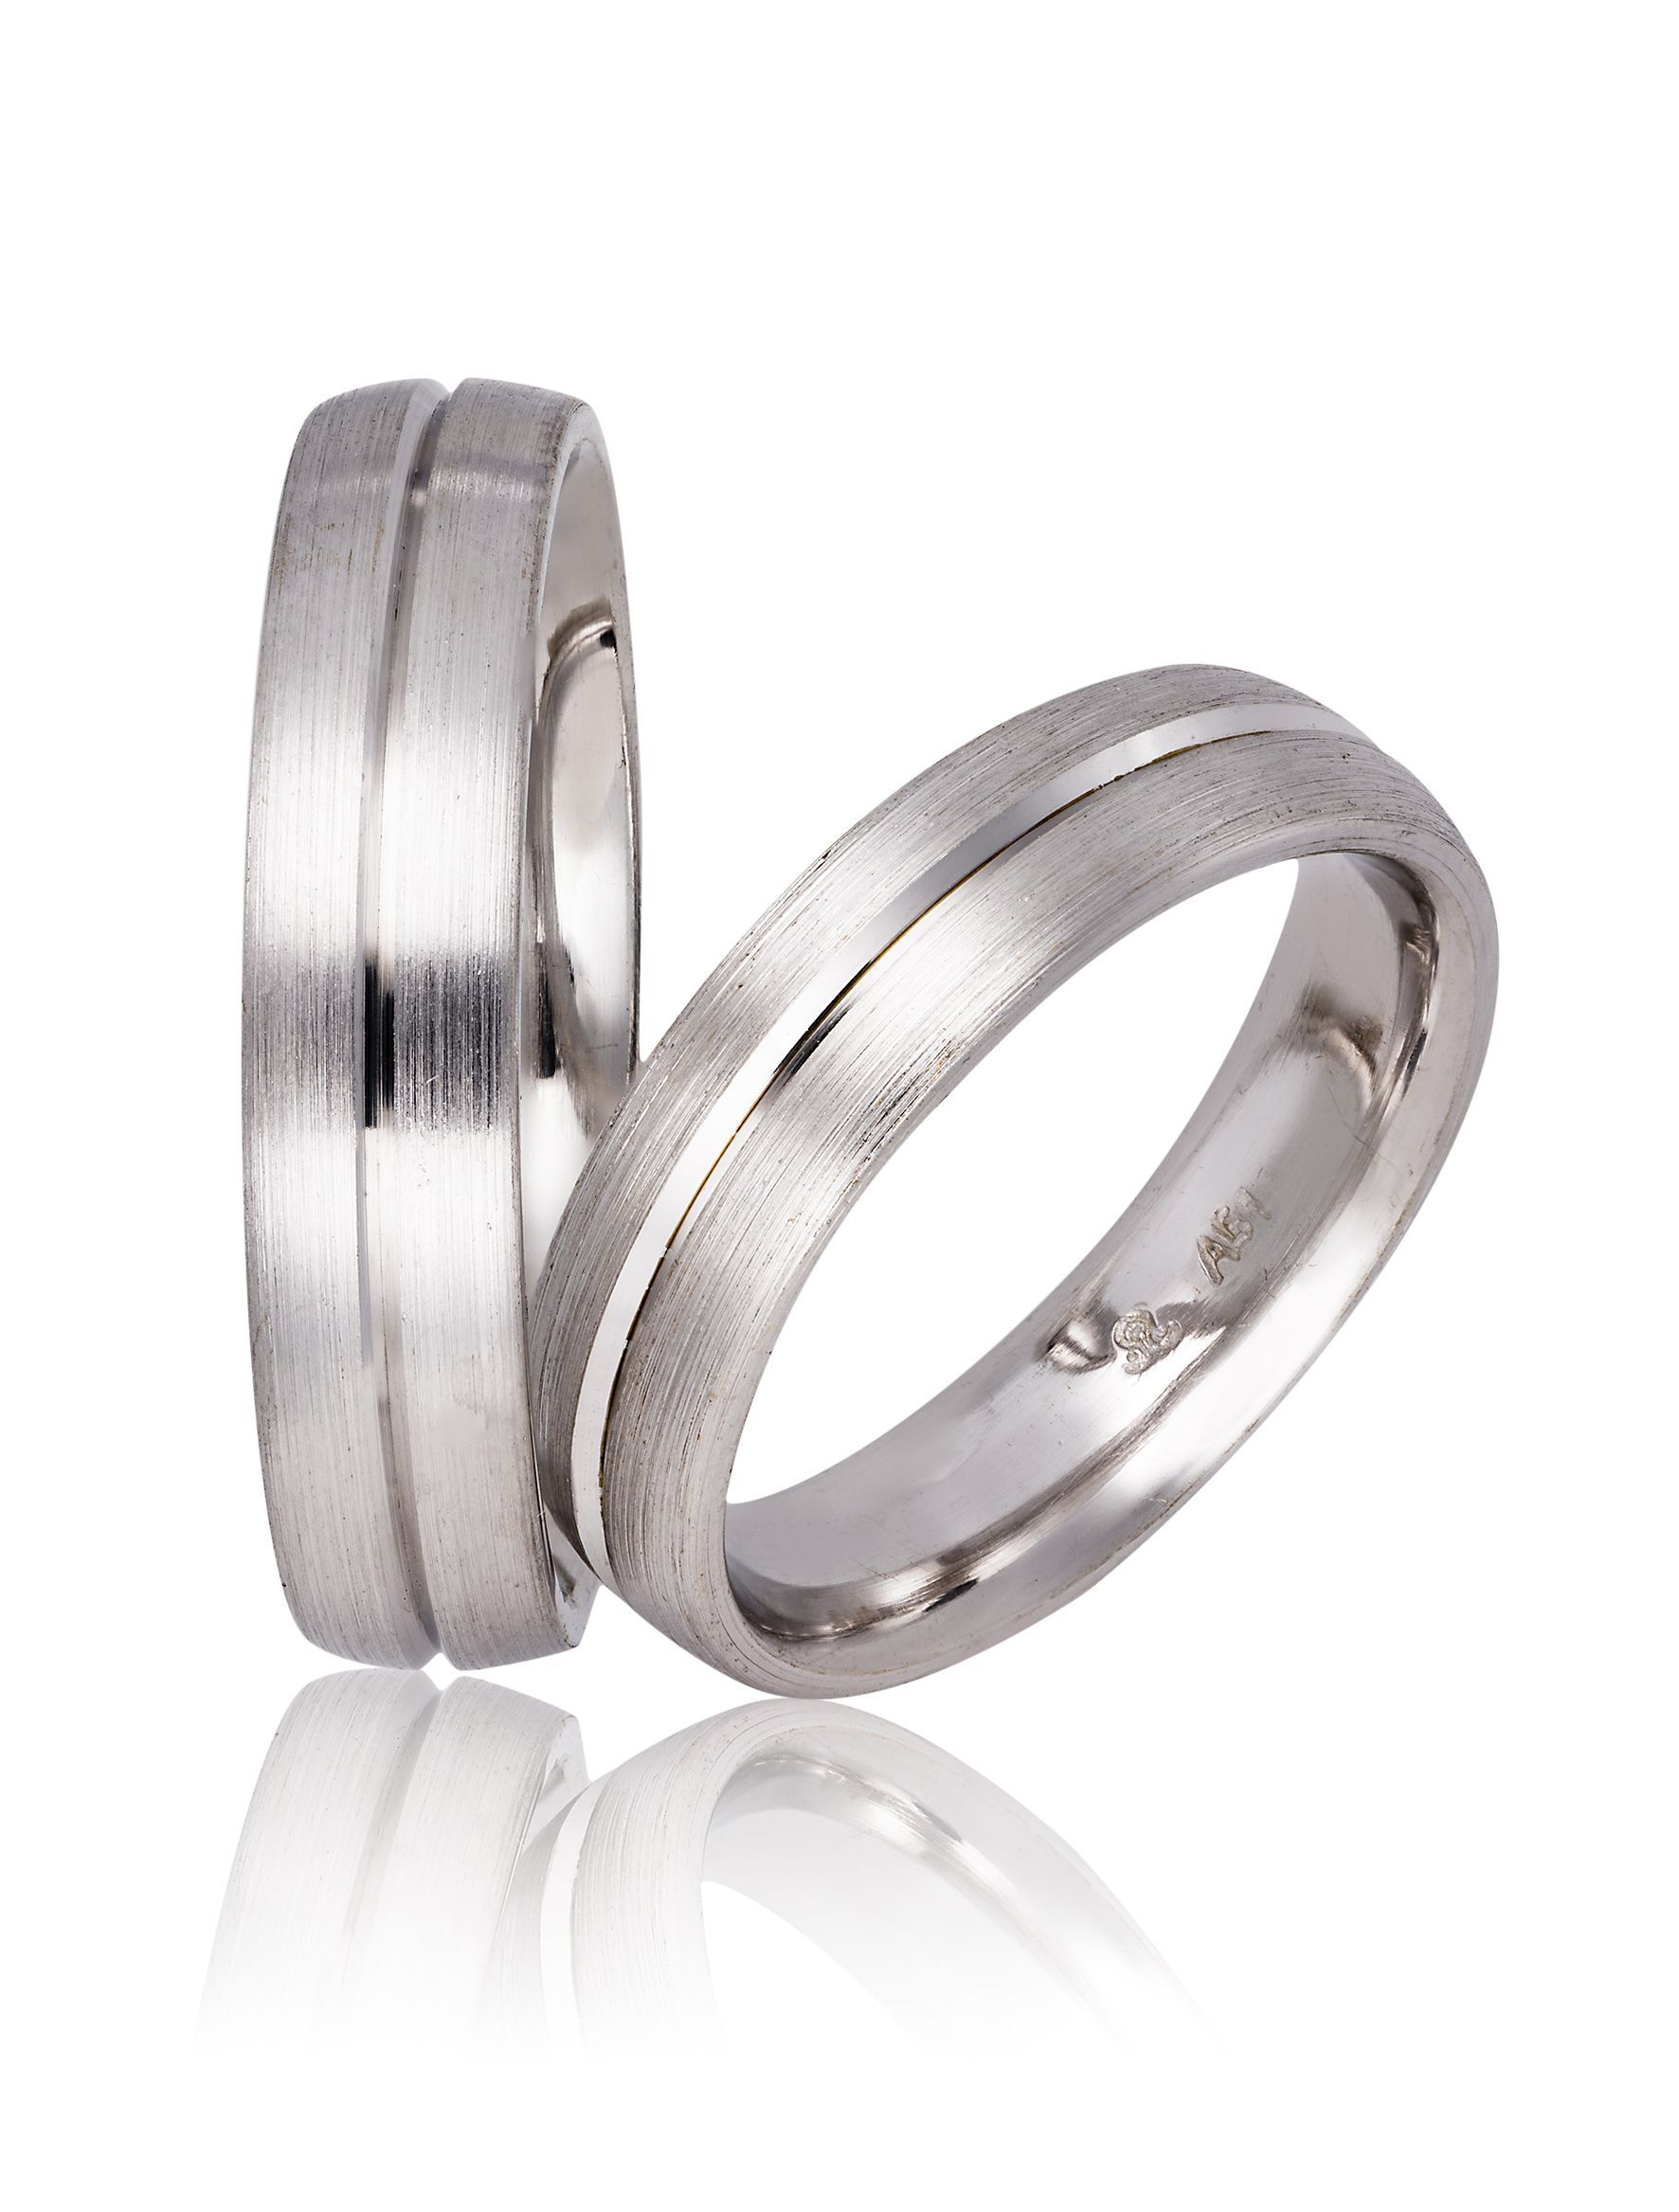 White gold wedding rings 5mm (code 731)